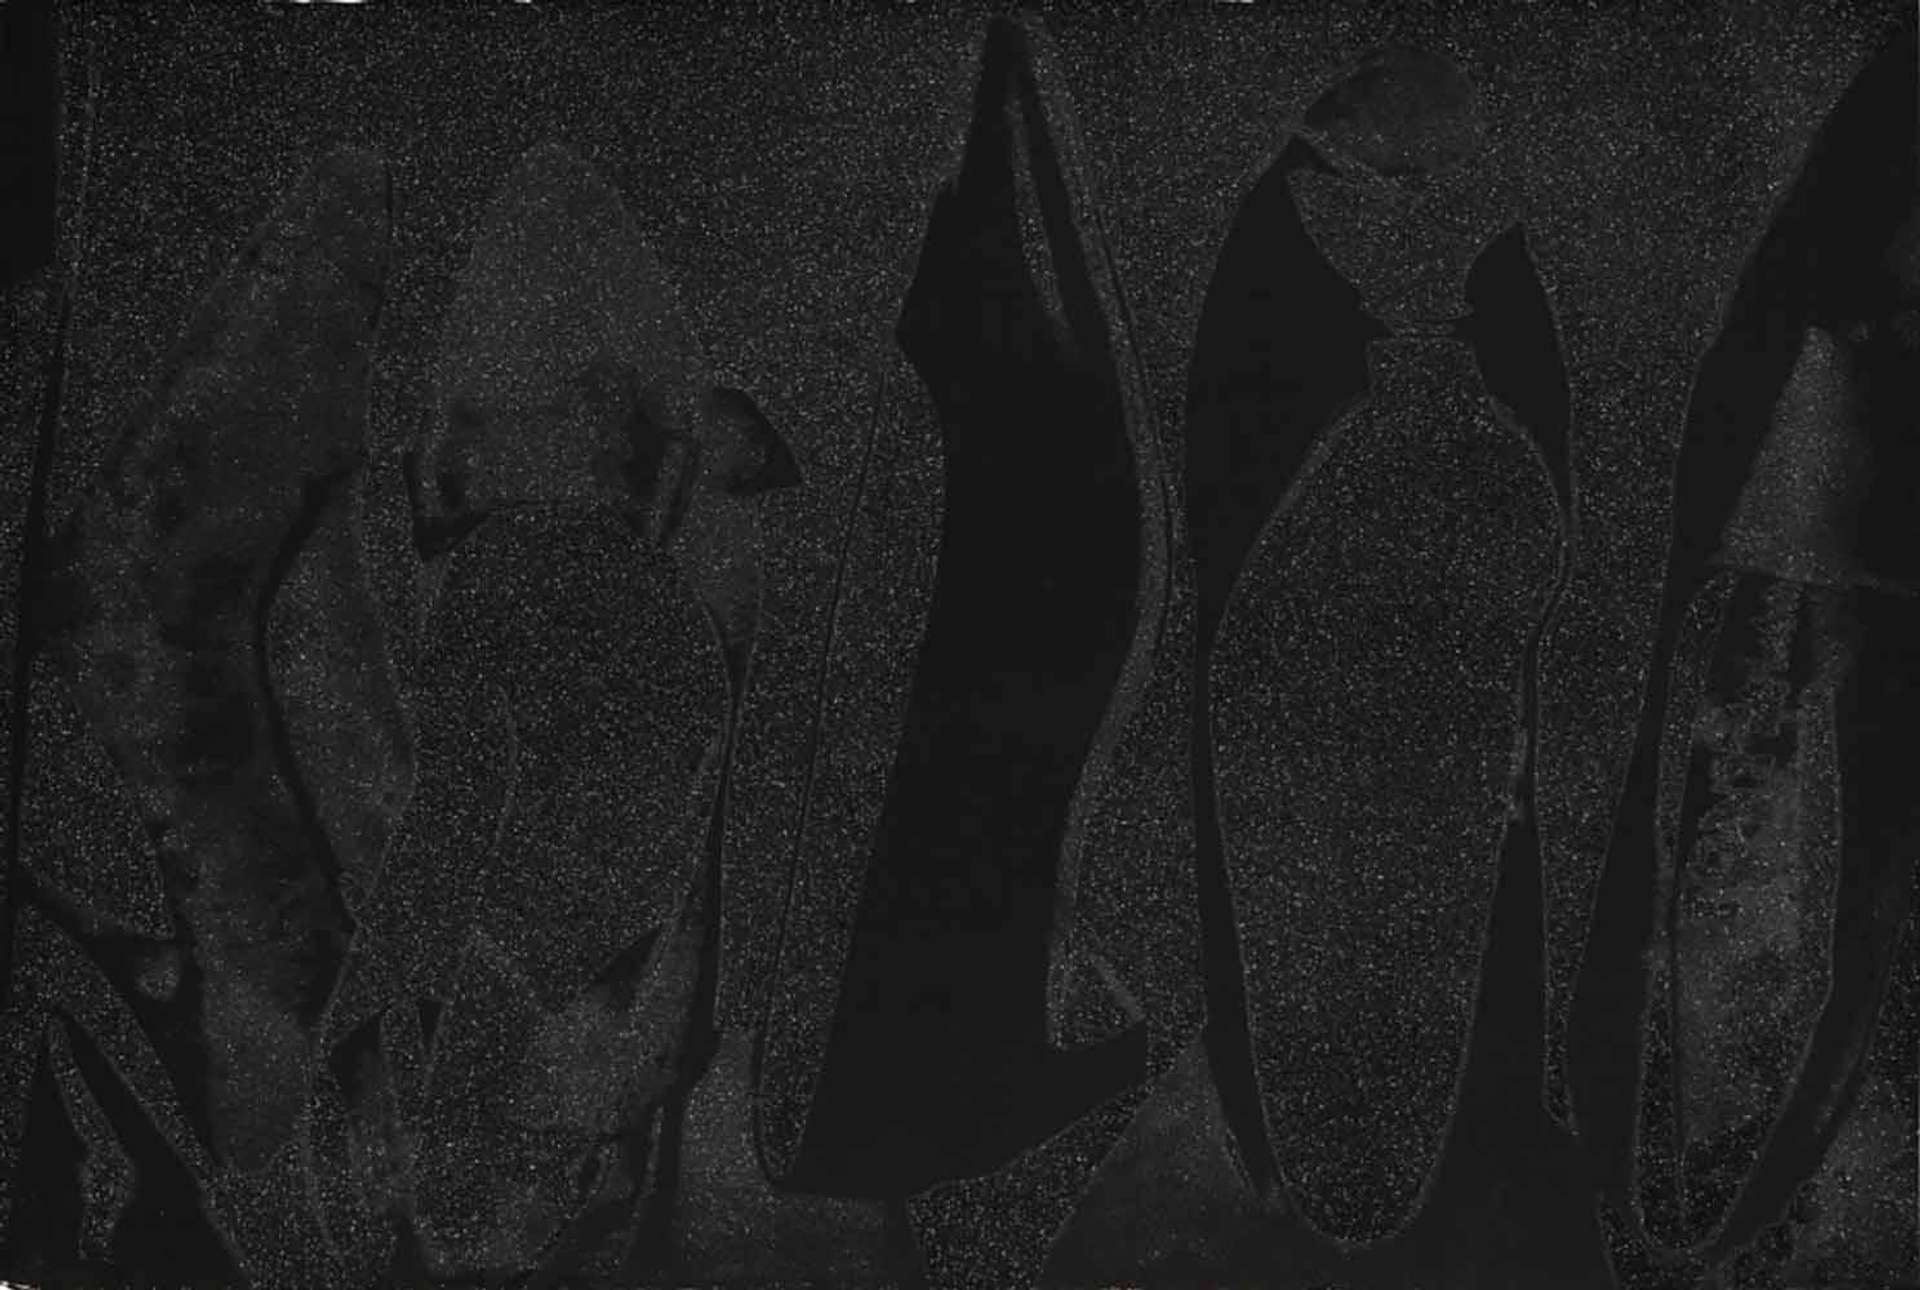 Diamond Dust Shoes (F. & S. II.256) by Andy Warhol